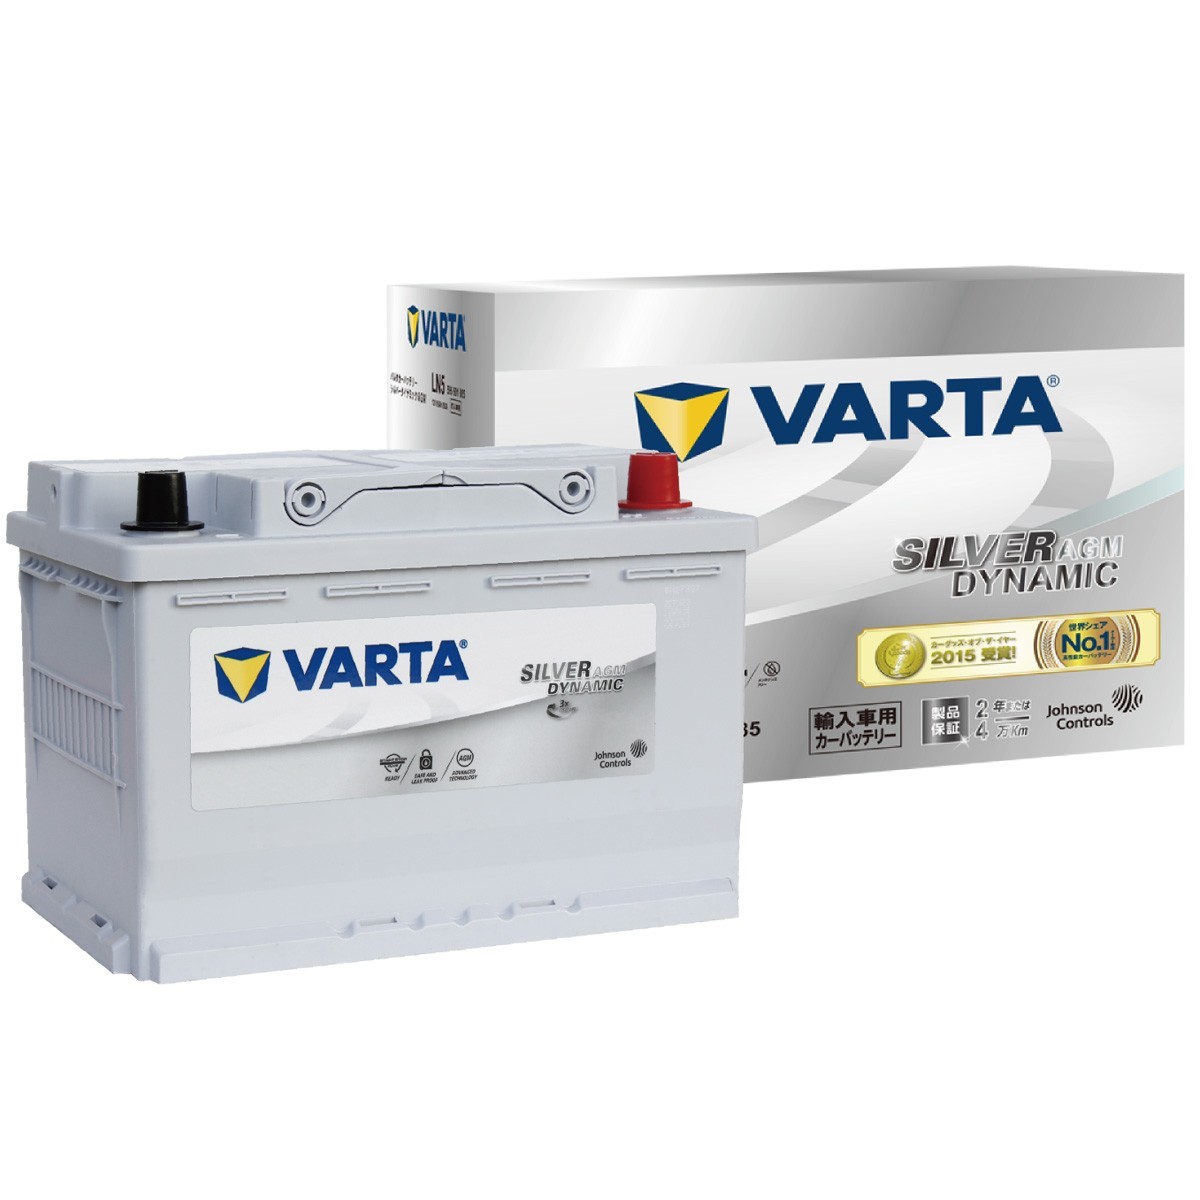 VARTA 595-901-085LN5(AGM/G14）バルタ 95Ah SILVER AGM DYNAMIC_画像1